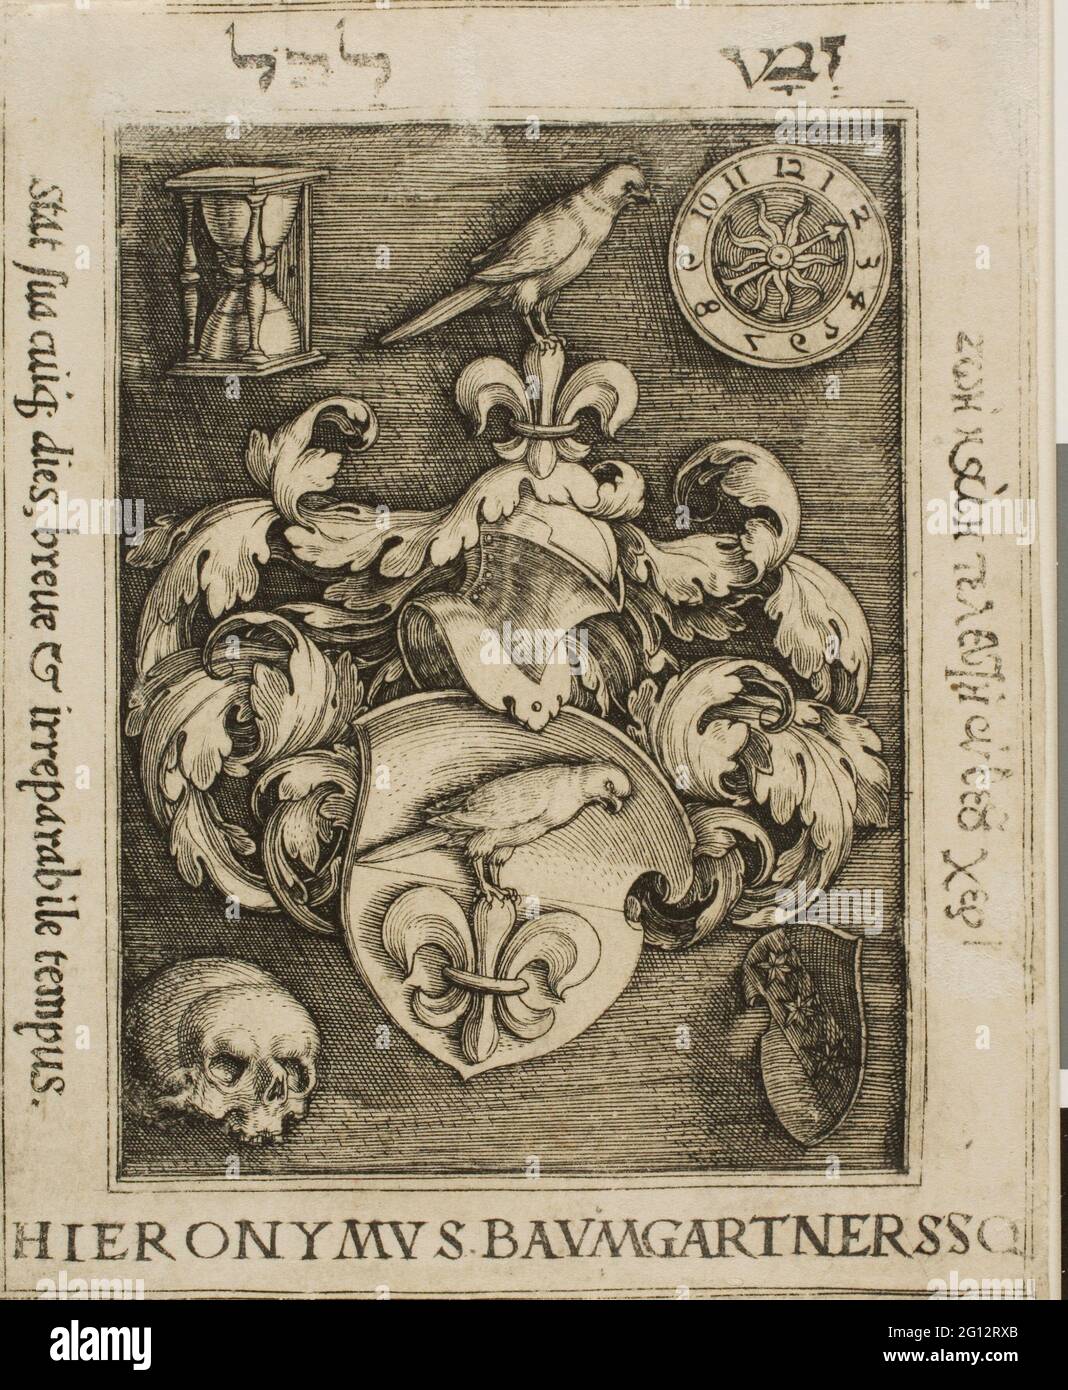 Barthel Beham. Bookplate of Hieronymous Baumgrtner - 1522/40 - Barthel Beham German, 1502-1540. Engraving in black on ivory laid paper. 1522 - 1540. Stock Photo